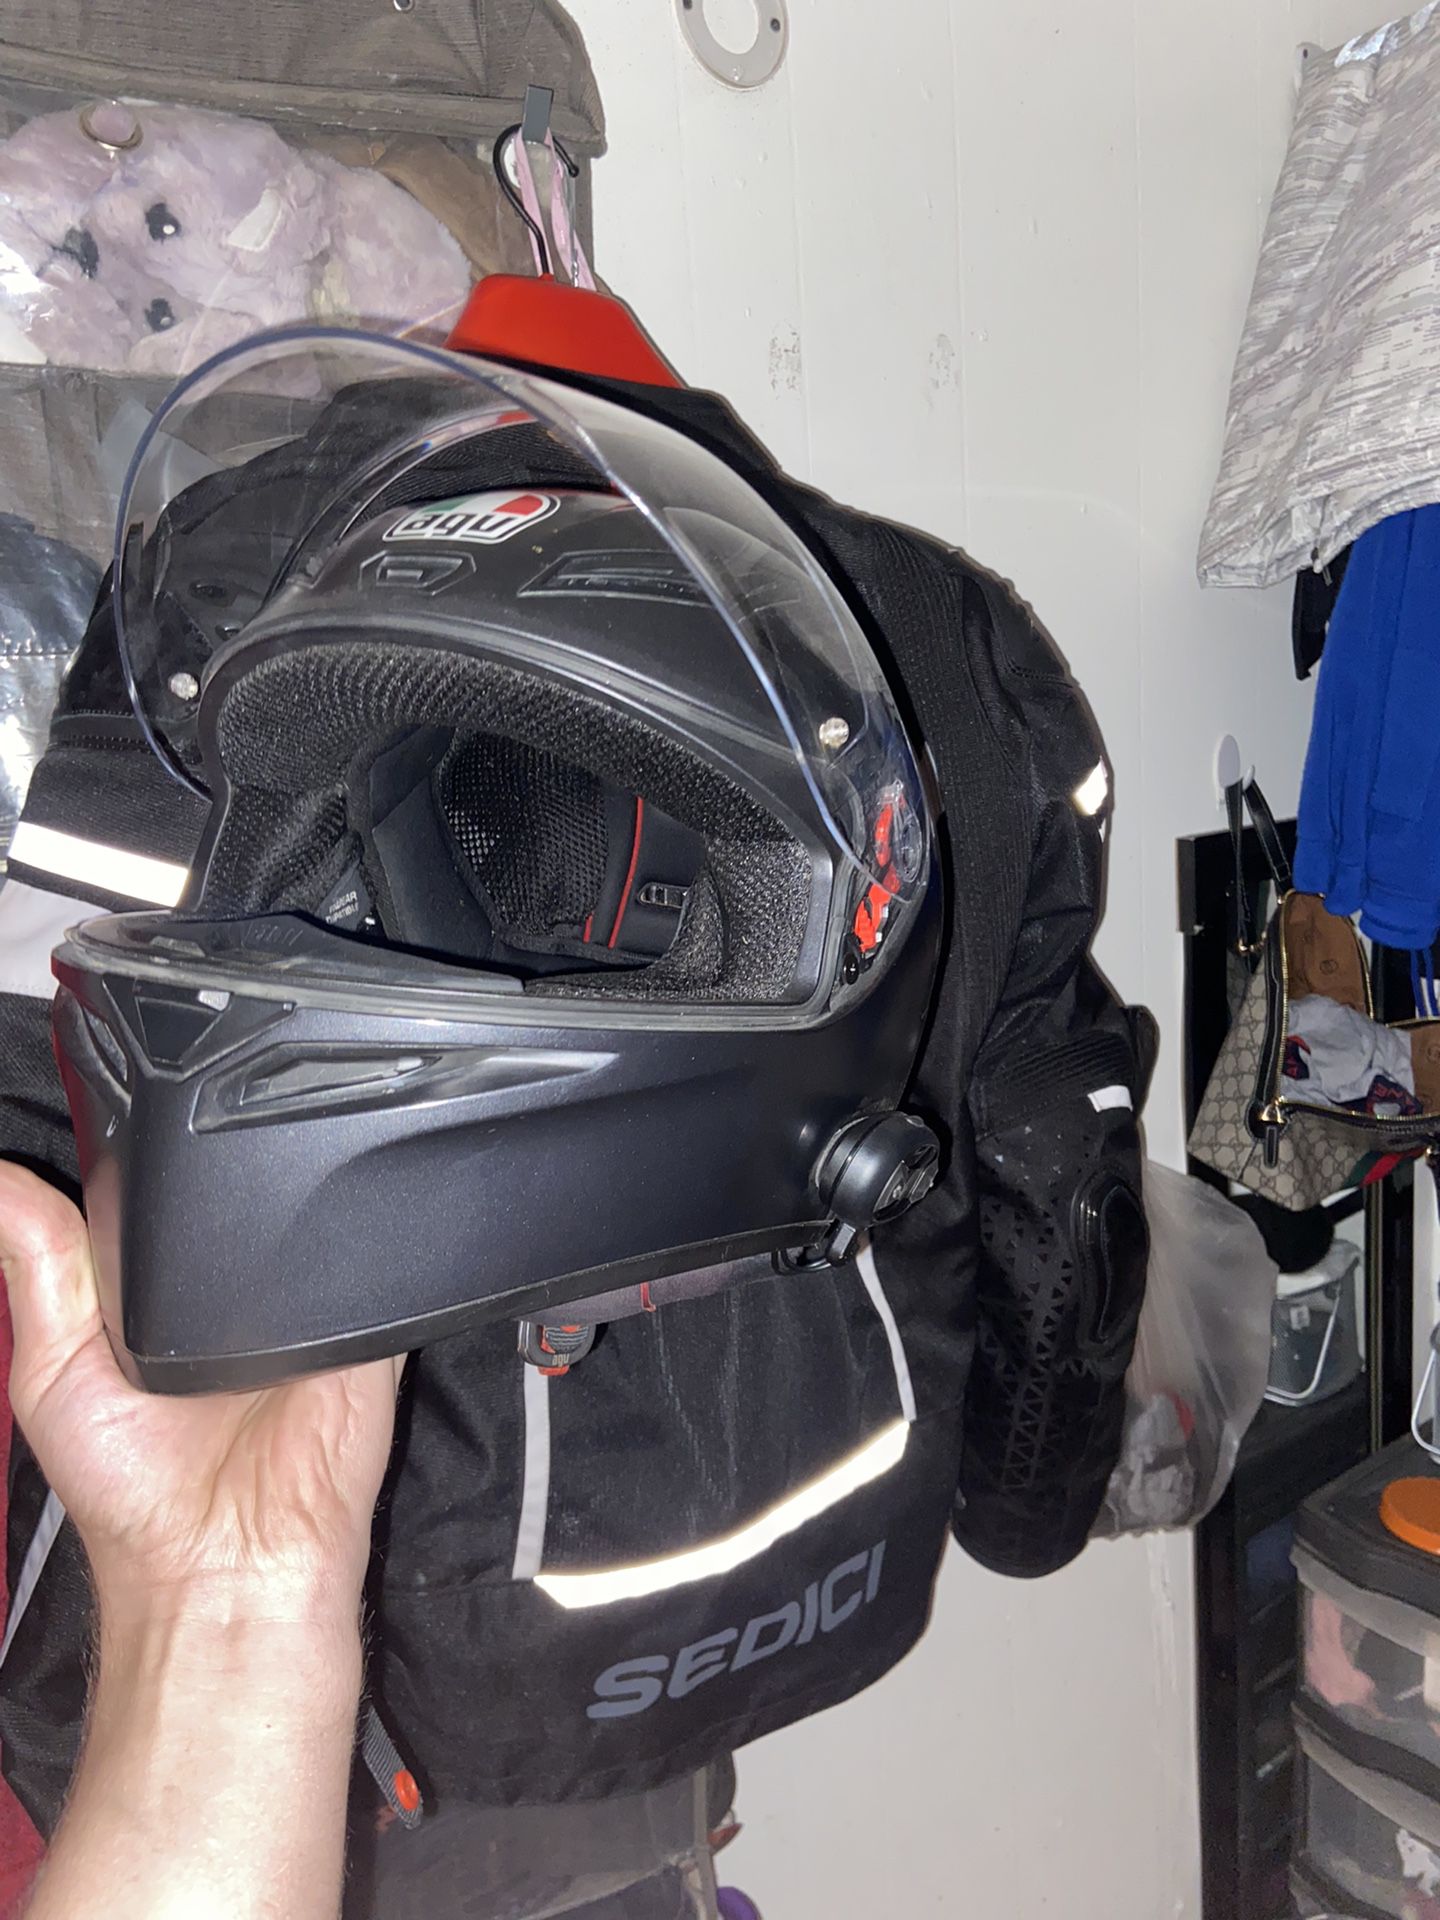 Motor Cycle Helmet And Xl Jacket